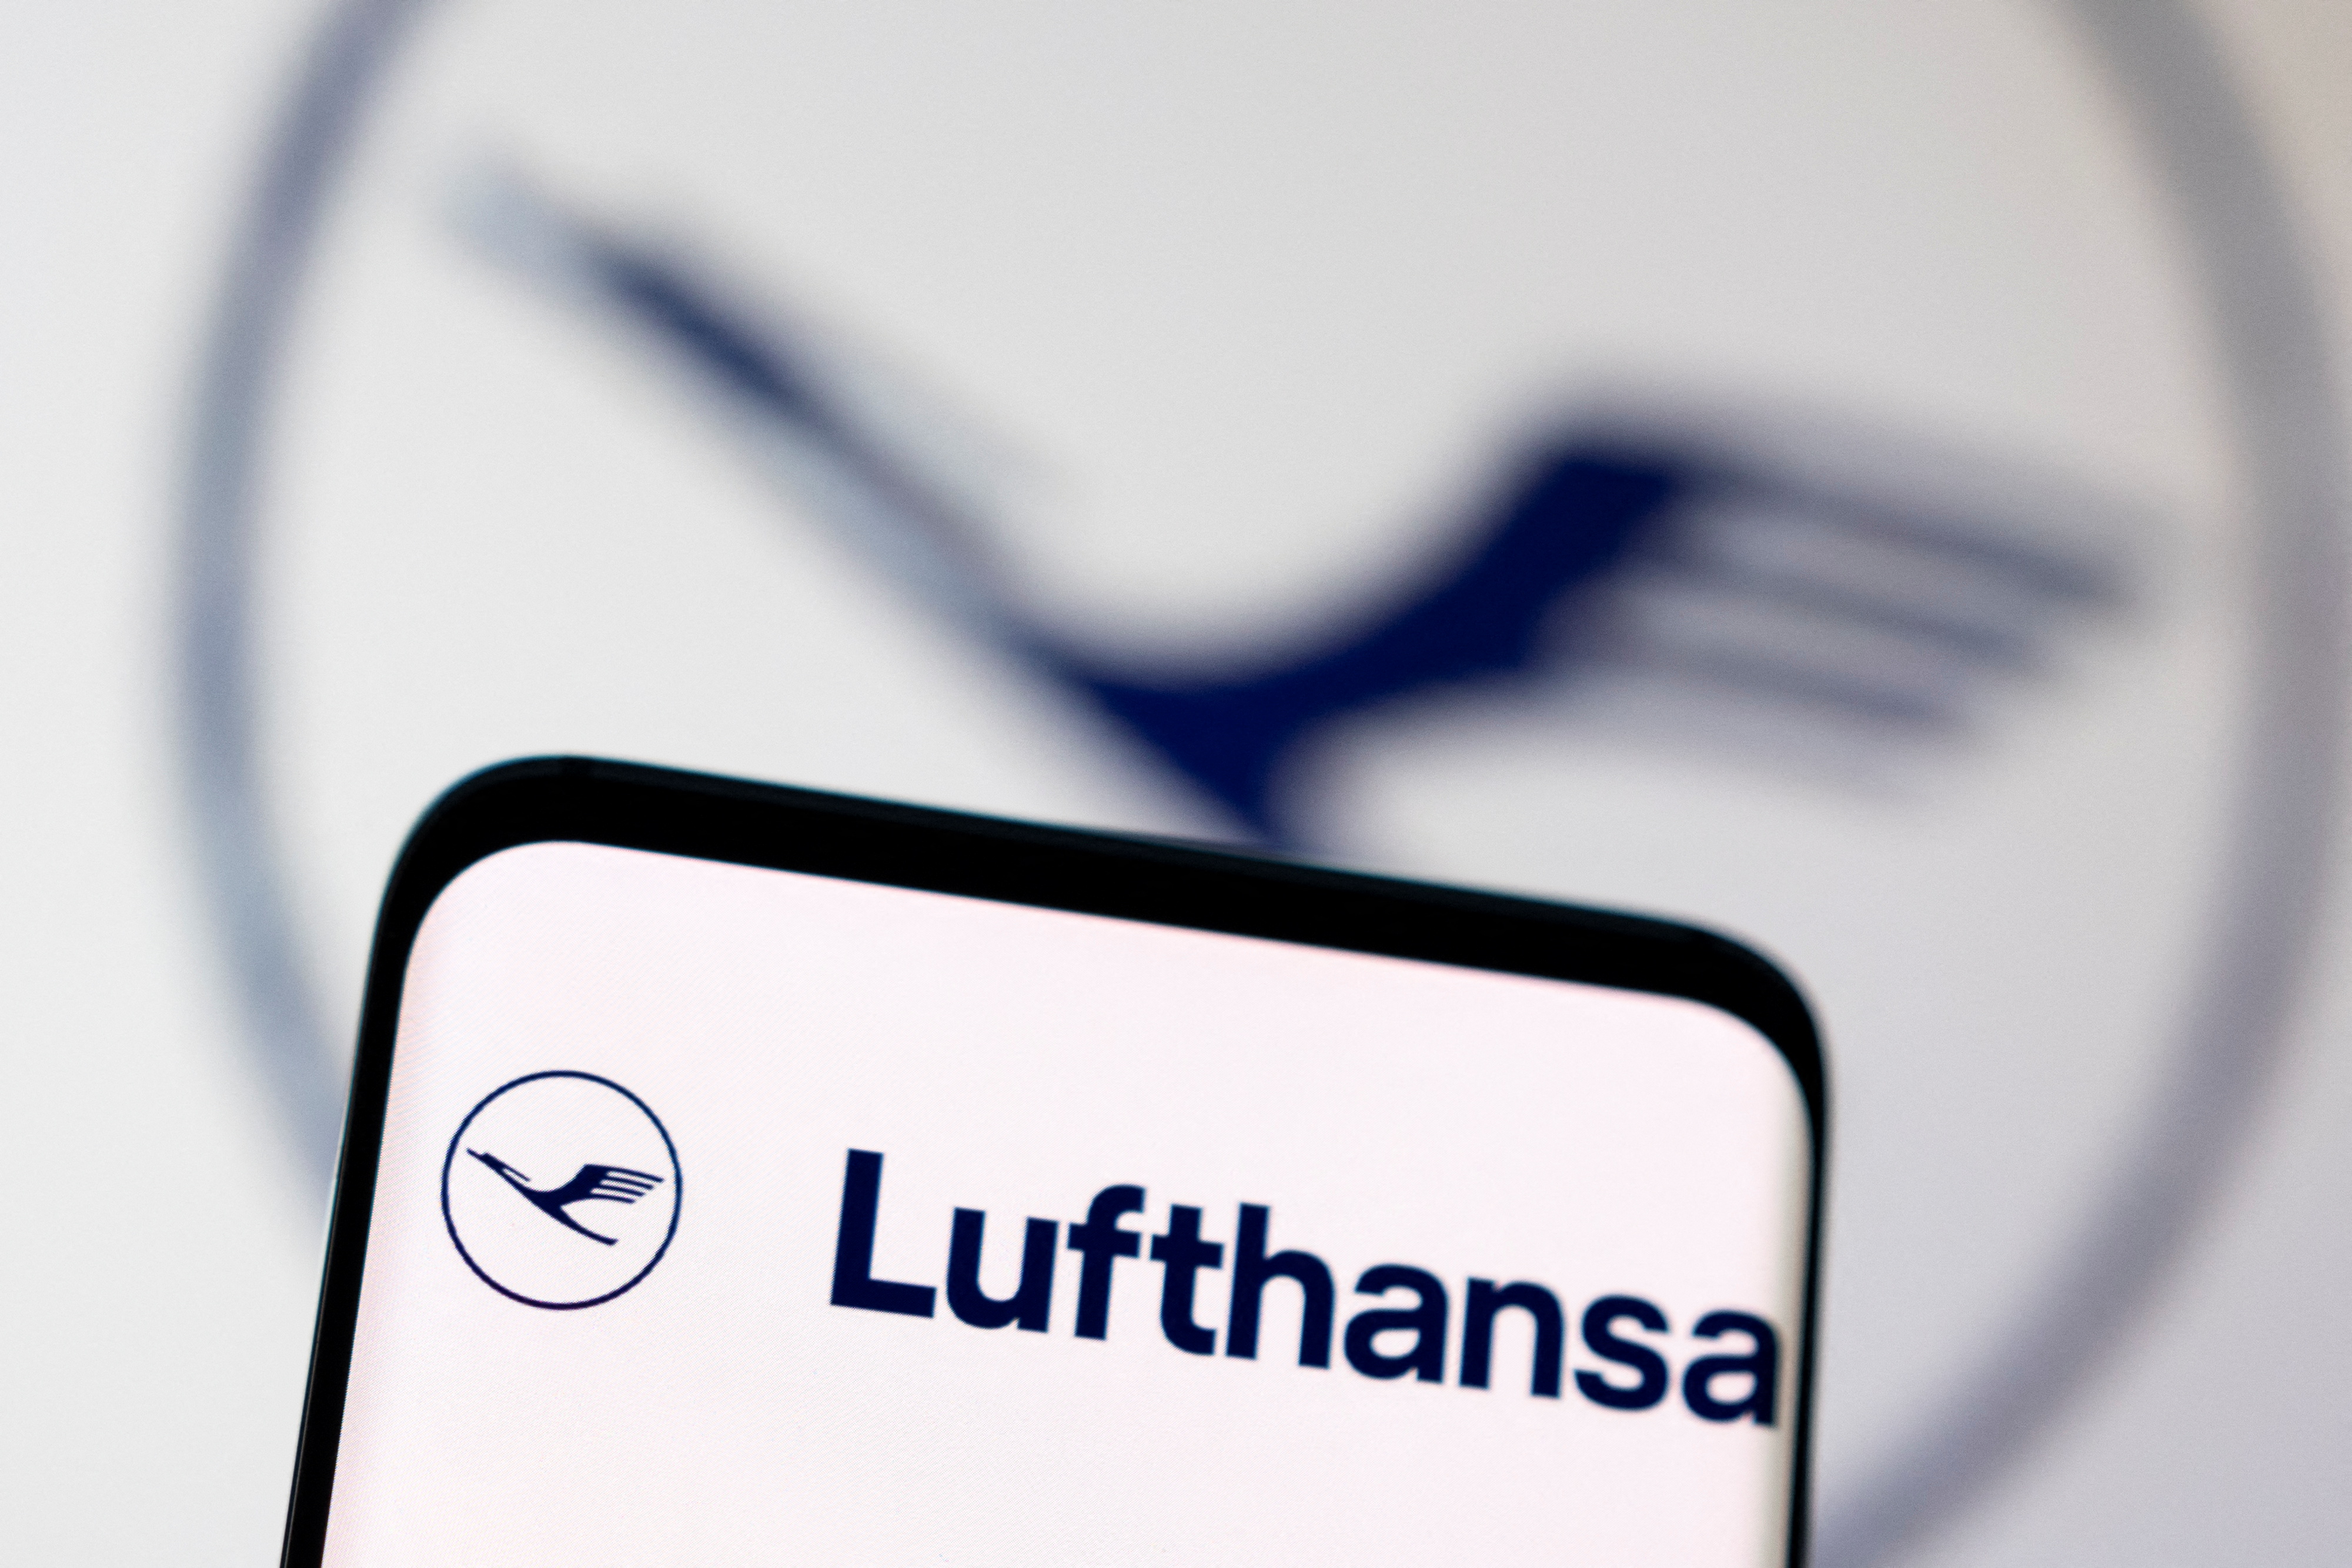 Illustration shows Lufthansa logo